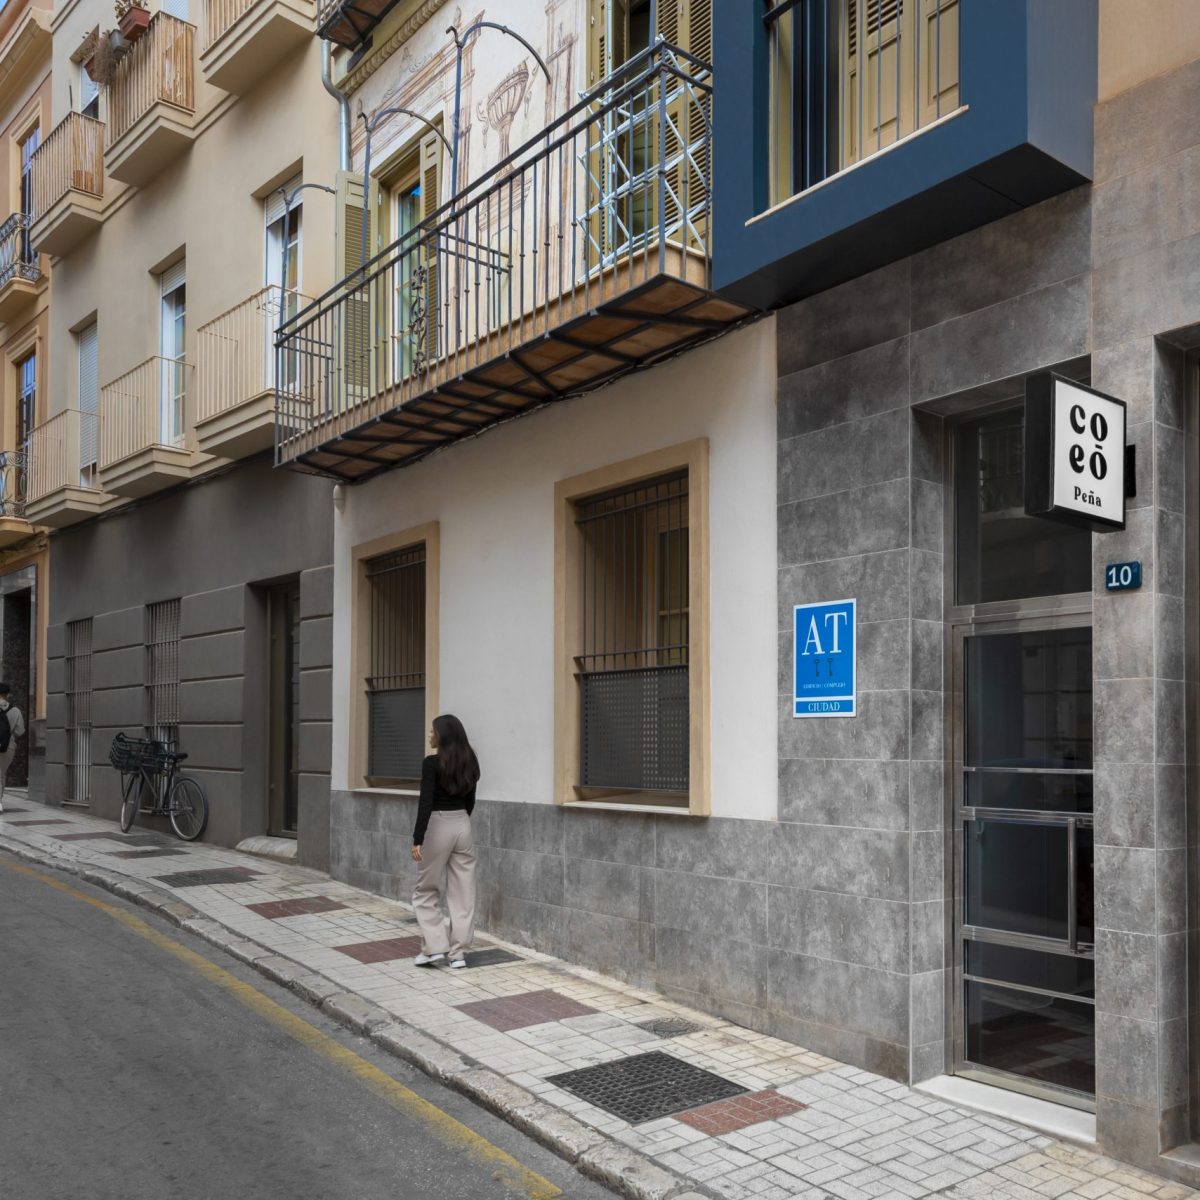 Main entrance to Peña apartments in Malaga